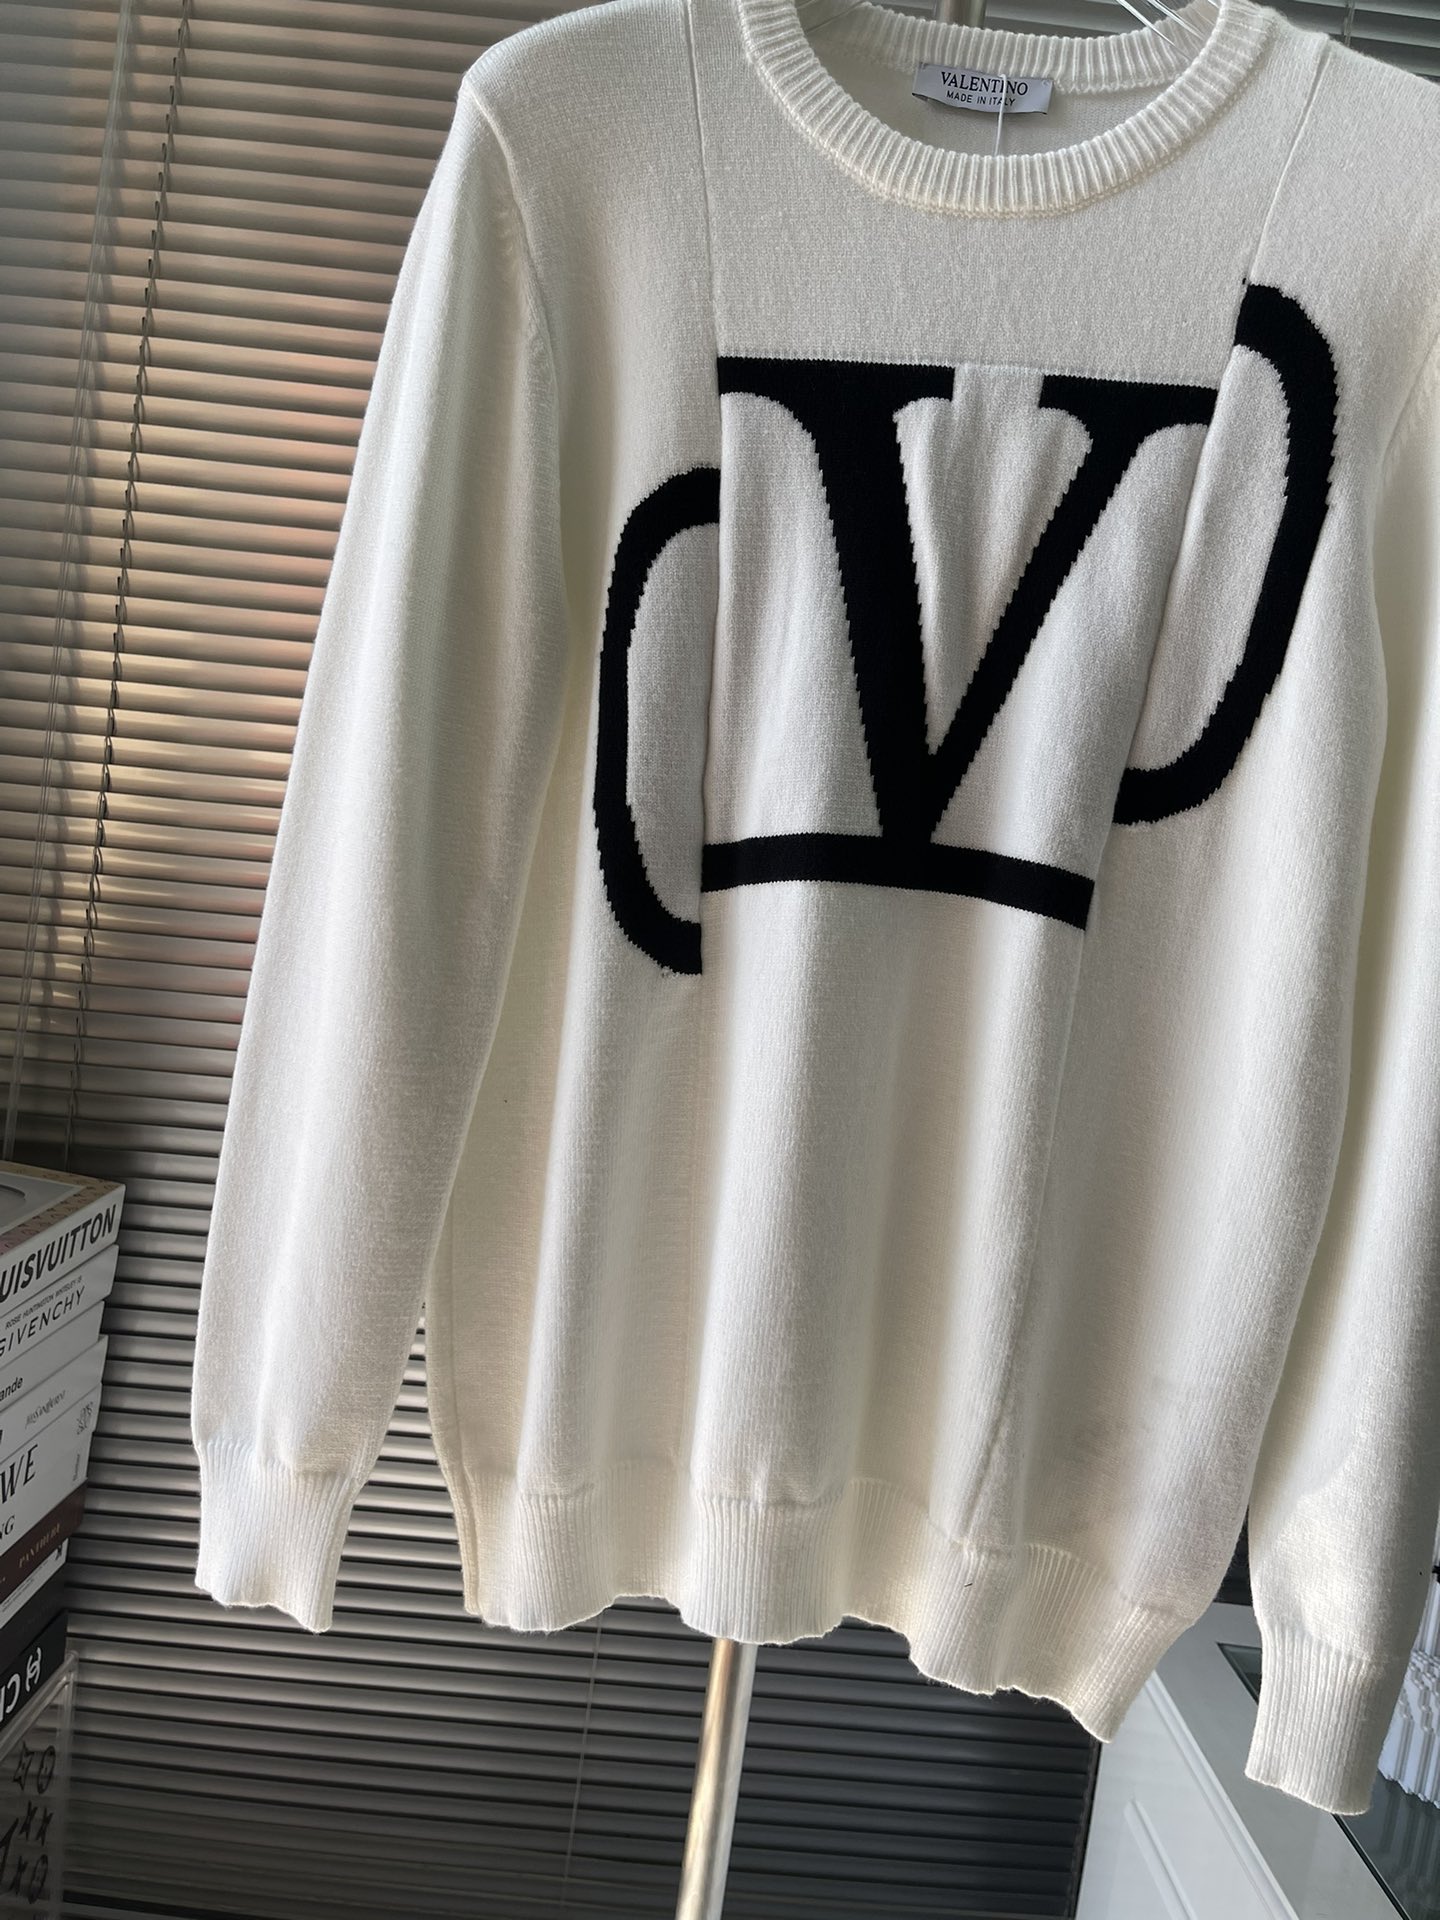 valentino ヴァレンティノ服レディース激安通販 HOT品質保証 トップス セーター 柔らかい 保温 暖かい ホワイト_4